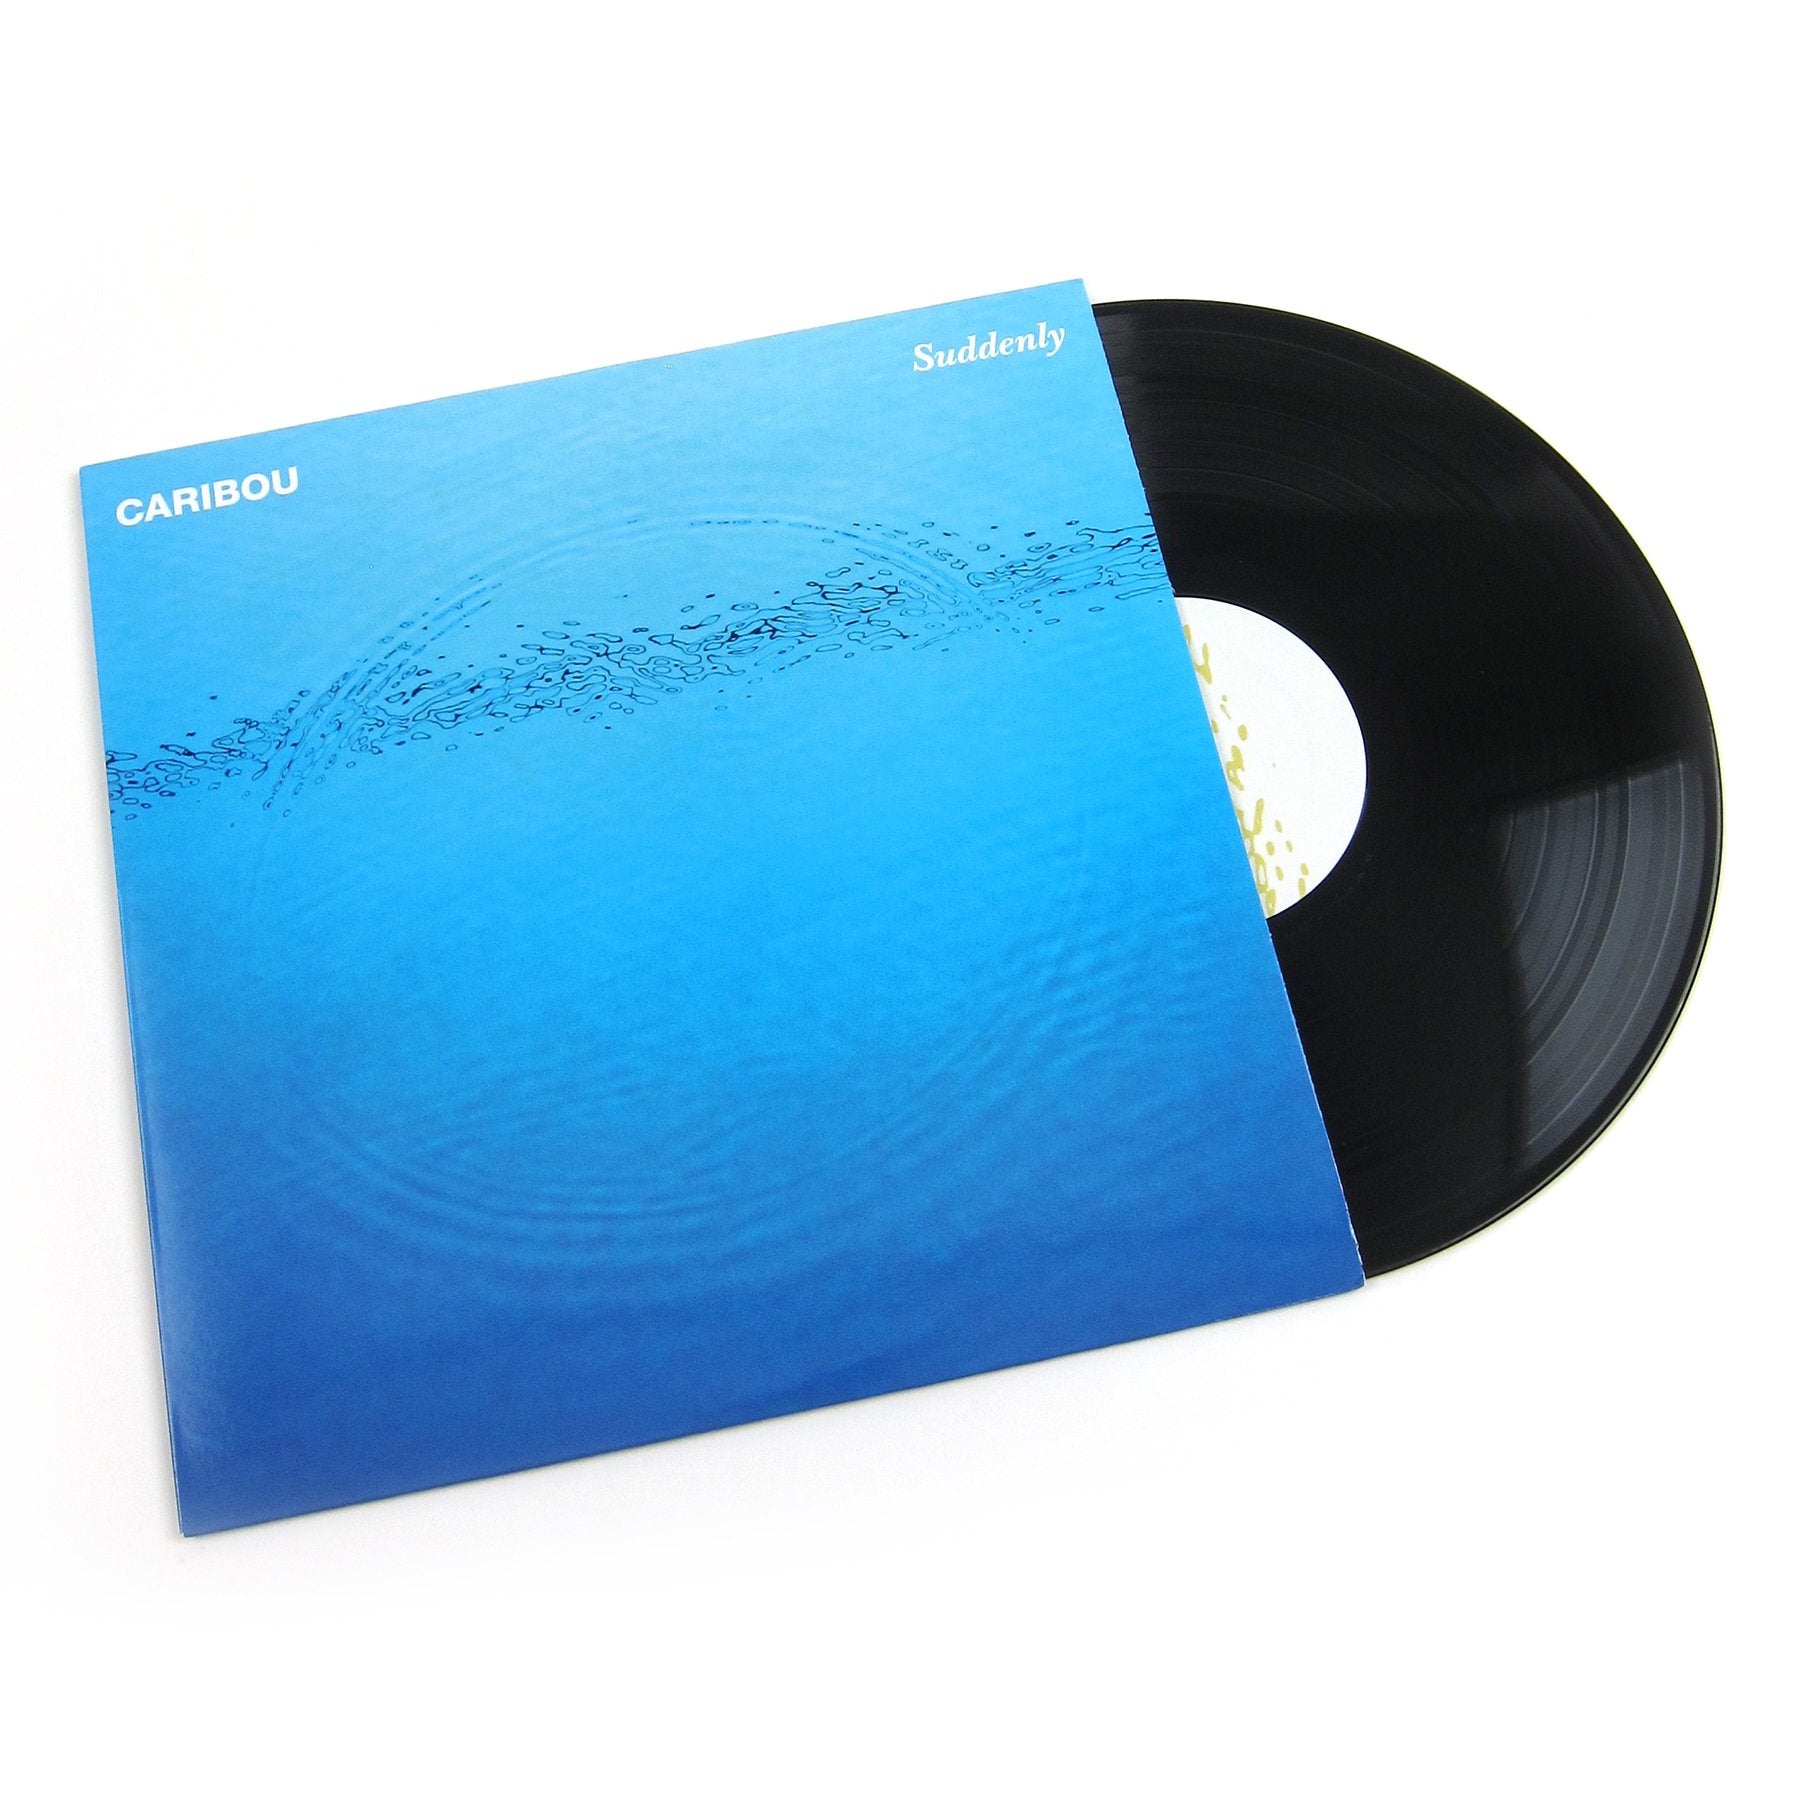 Caribou: Suddenly Vinyl LP